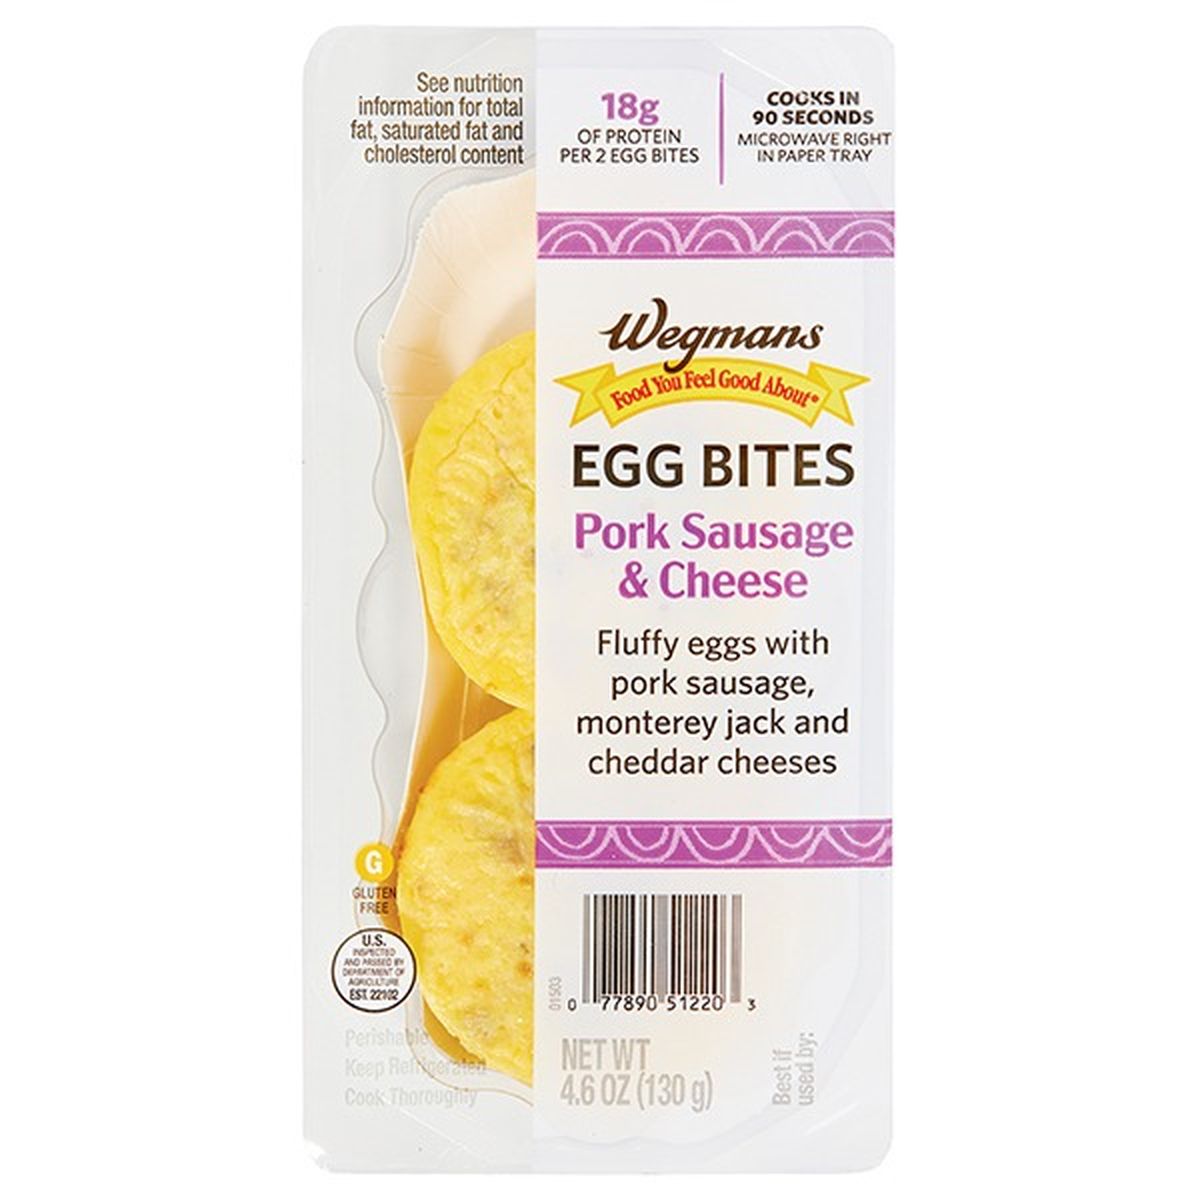 Calories in Wegmans Pork Sausage & Cheese Egg Bites